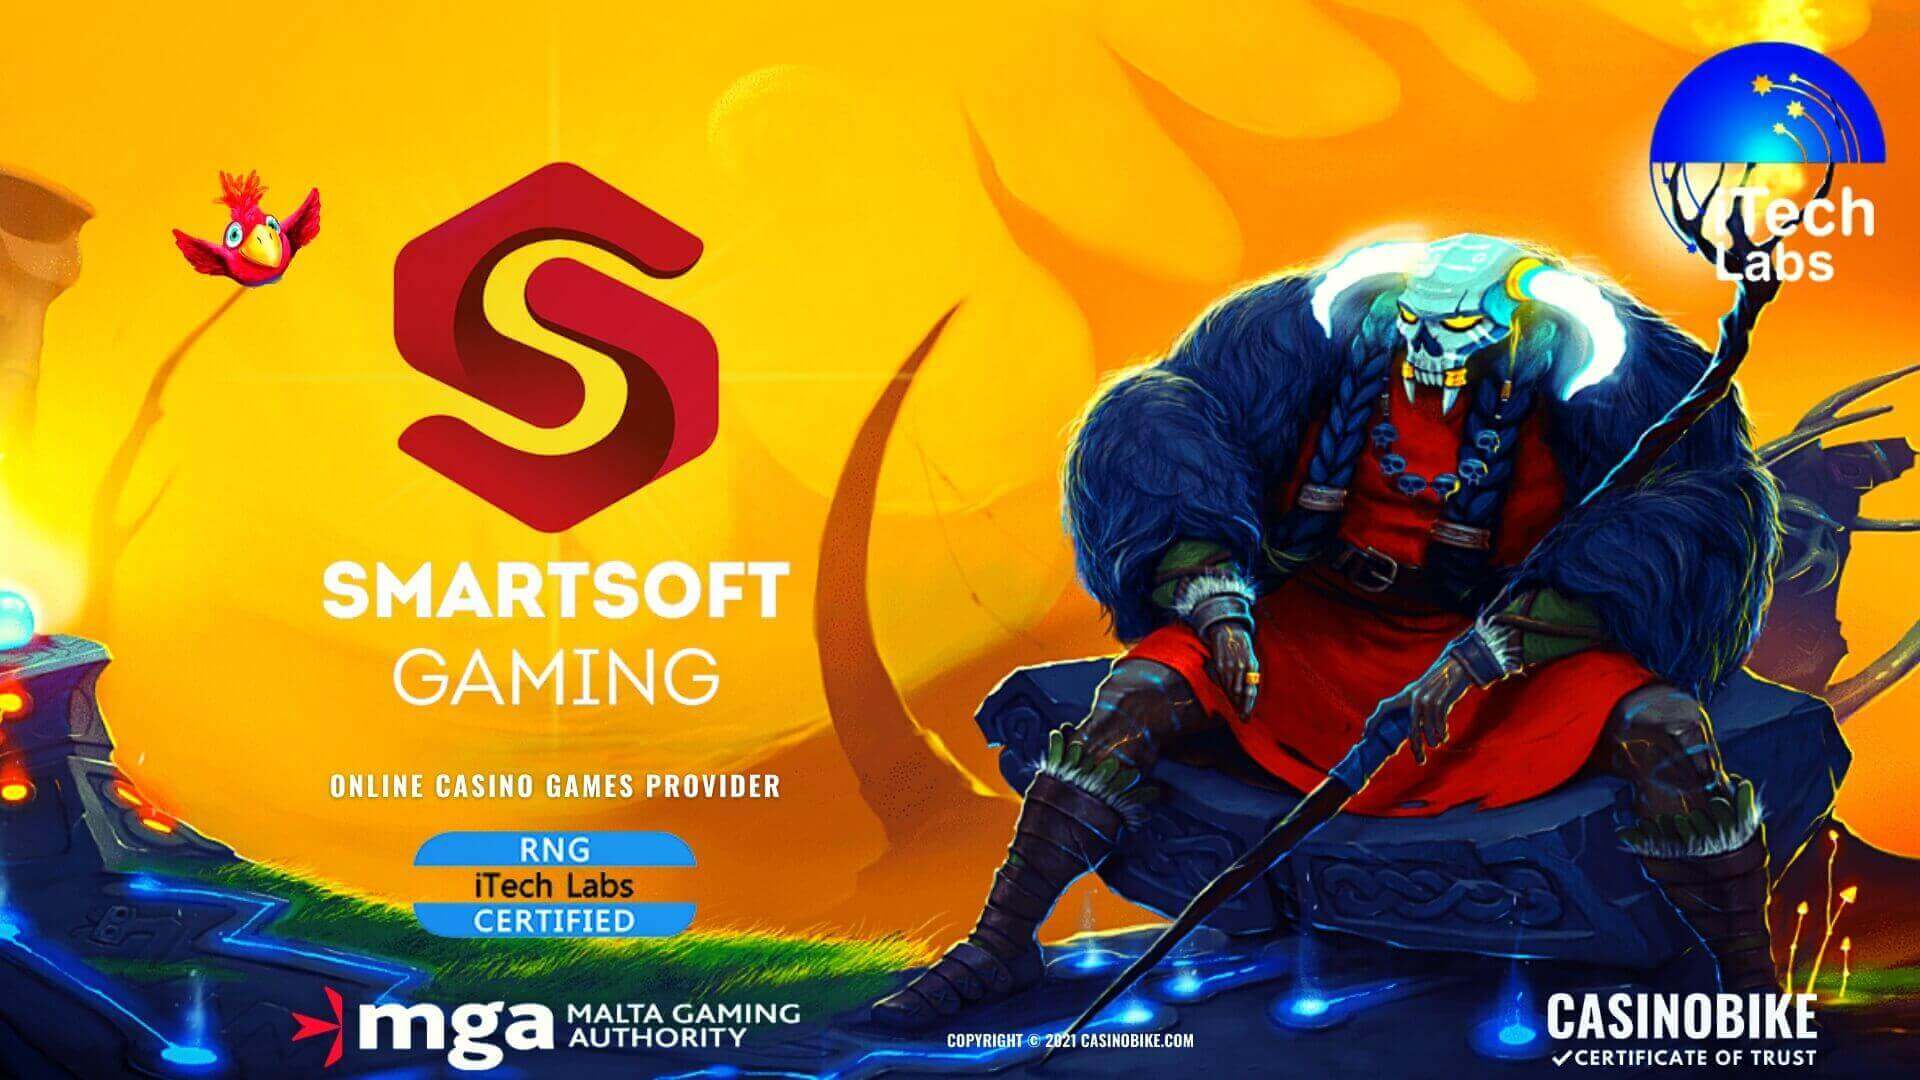 Smartsoft Gaming Online Casino Games Provider